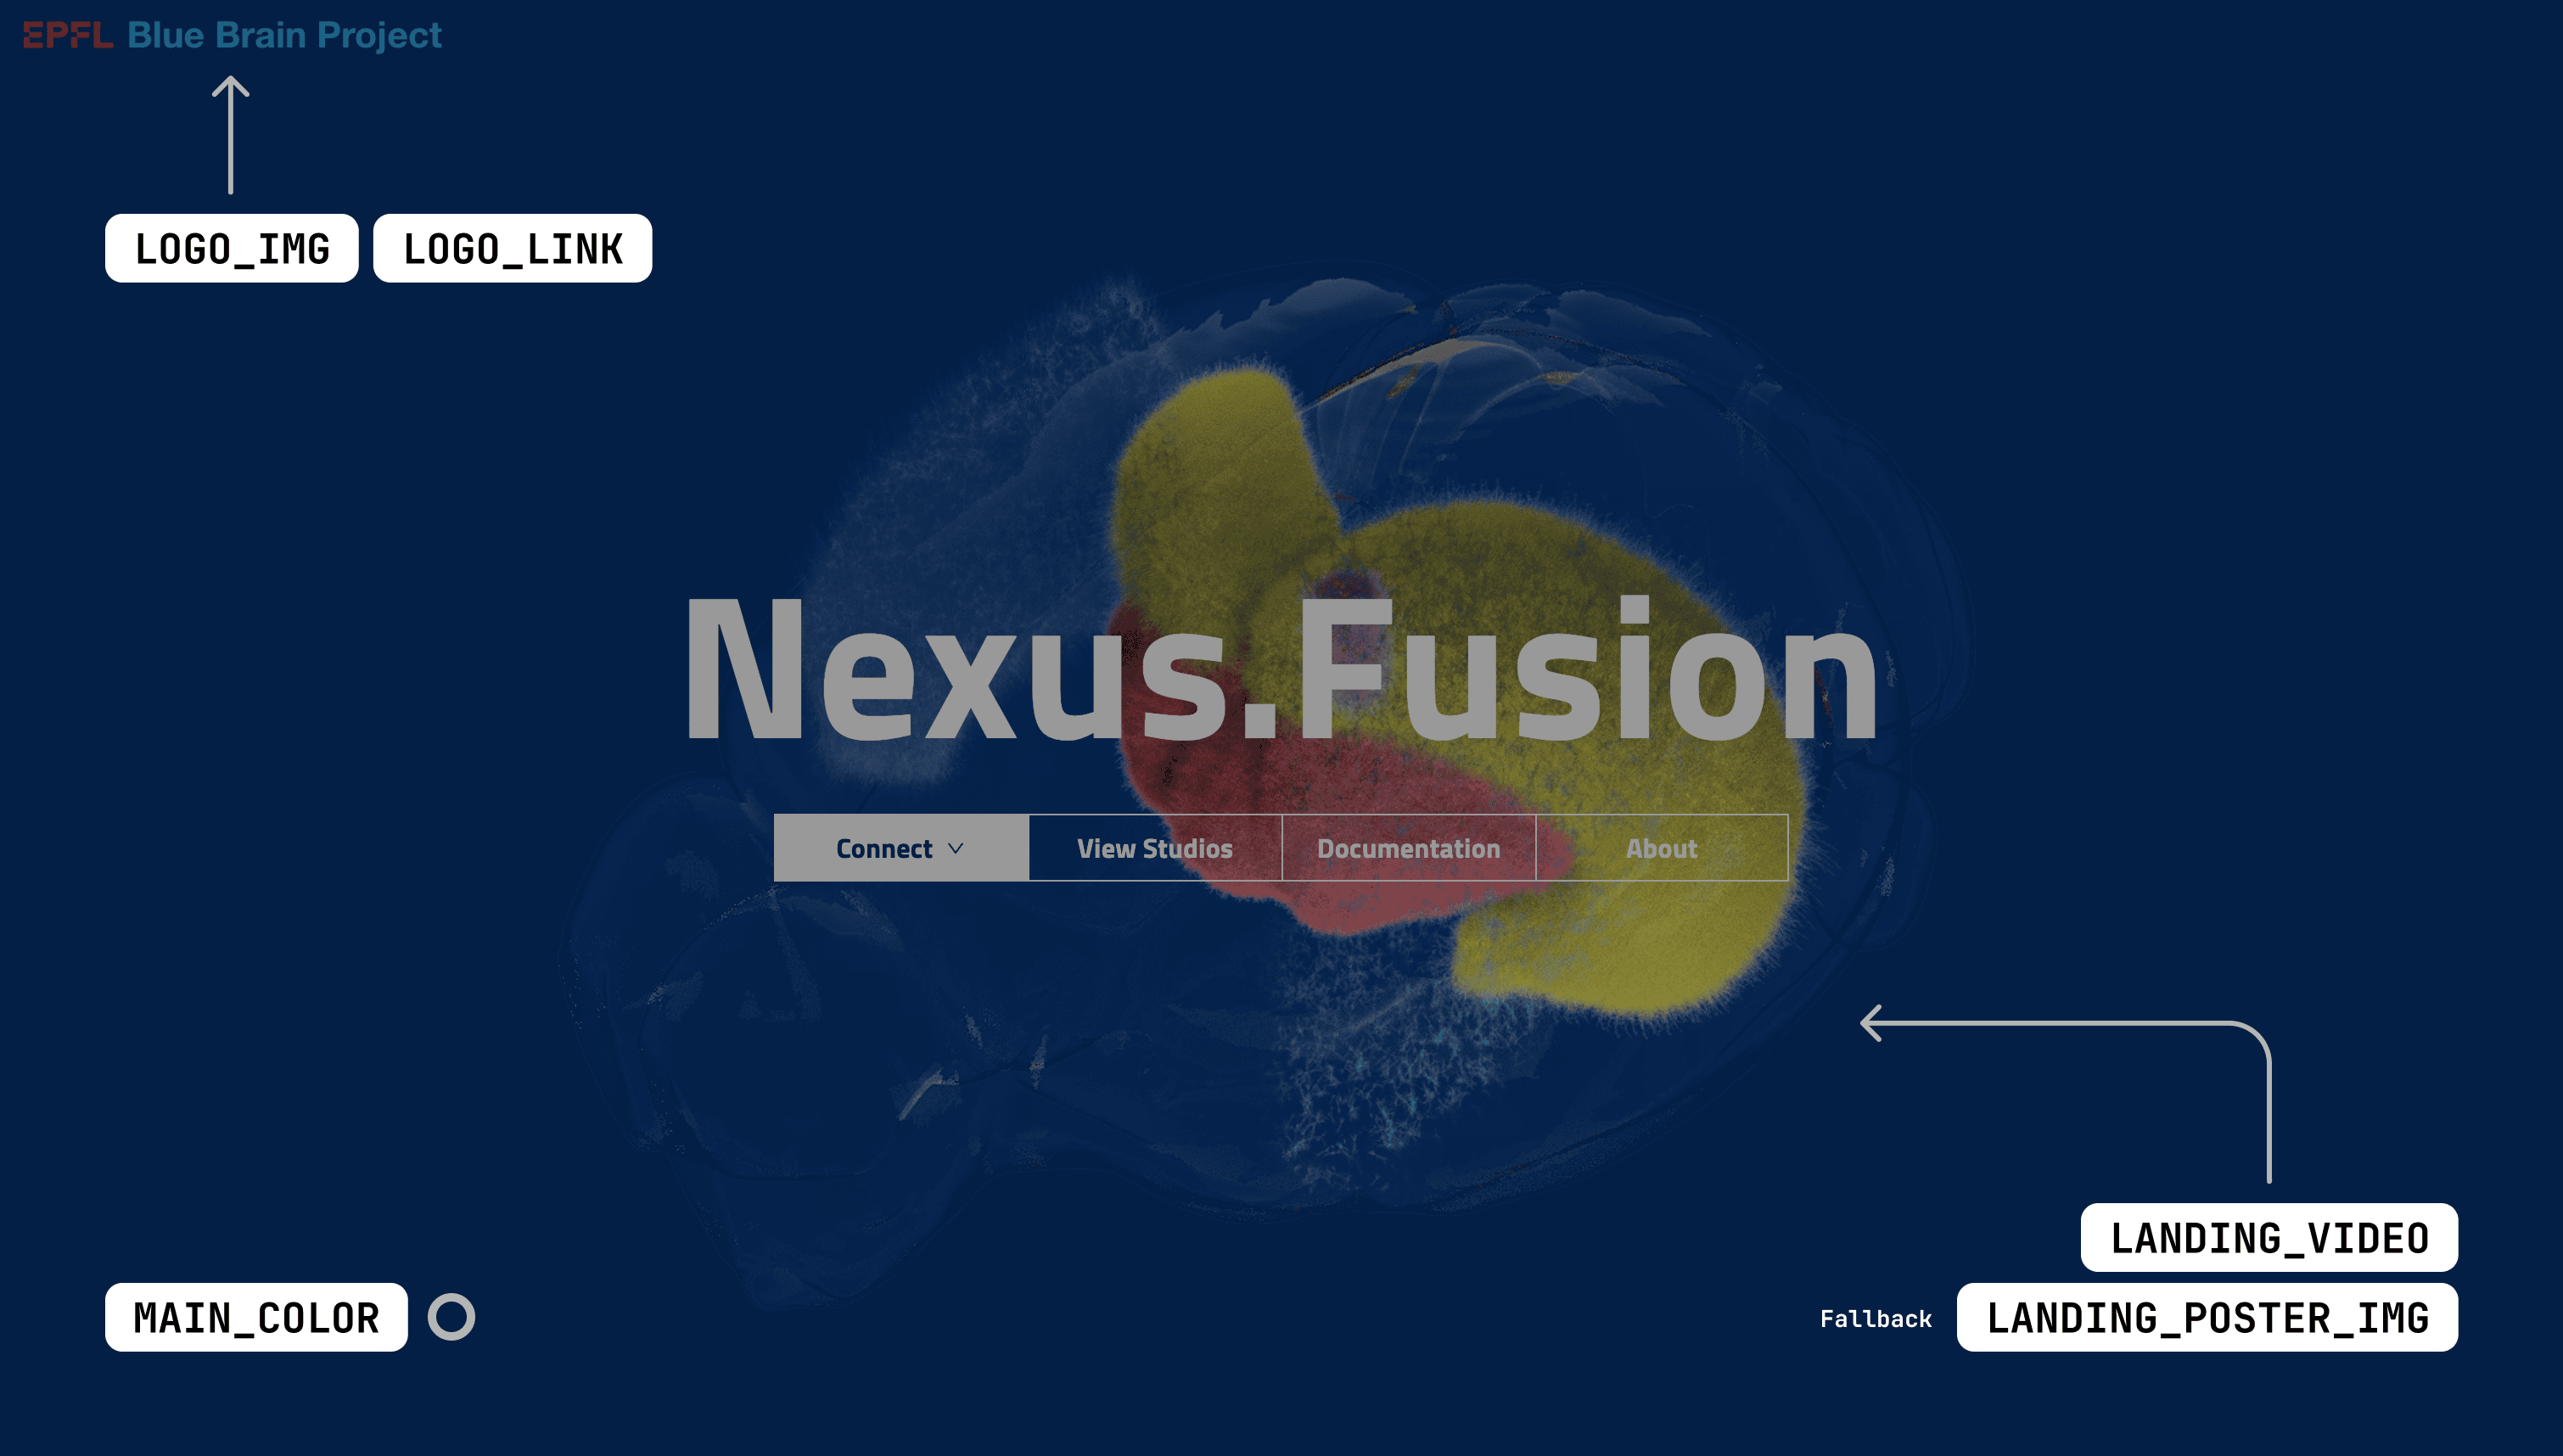 Nexus Header